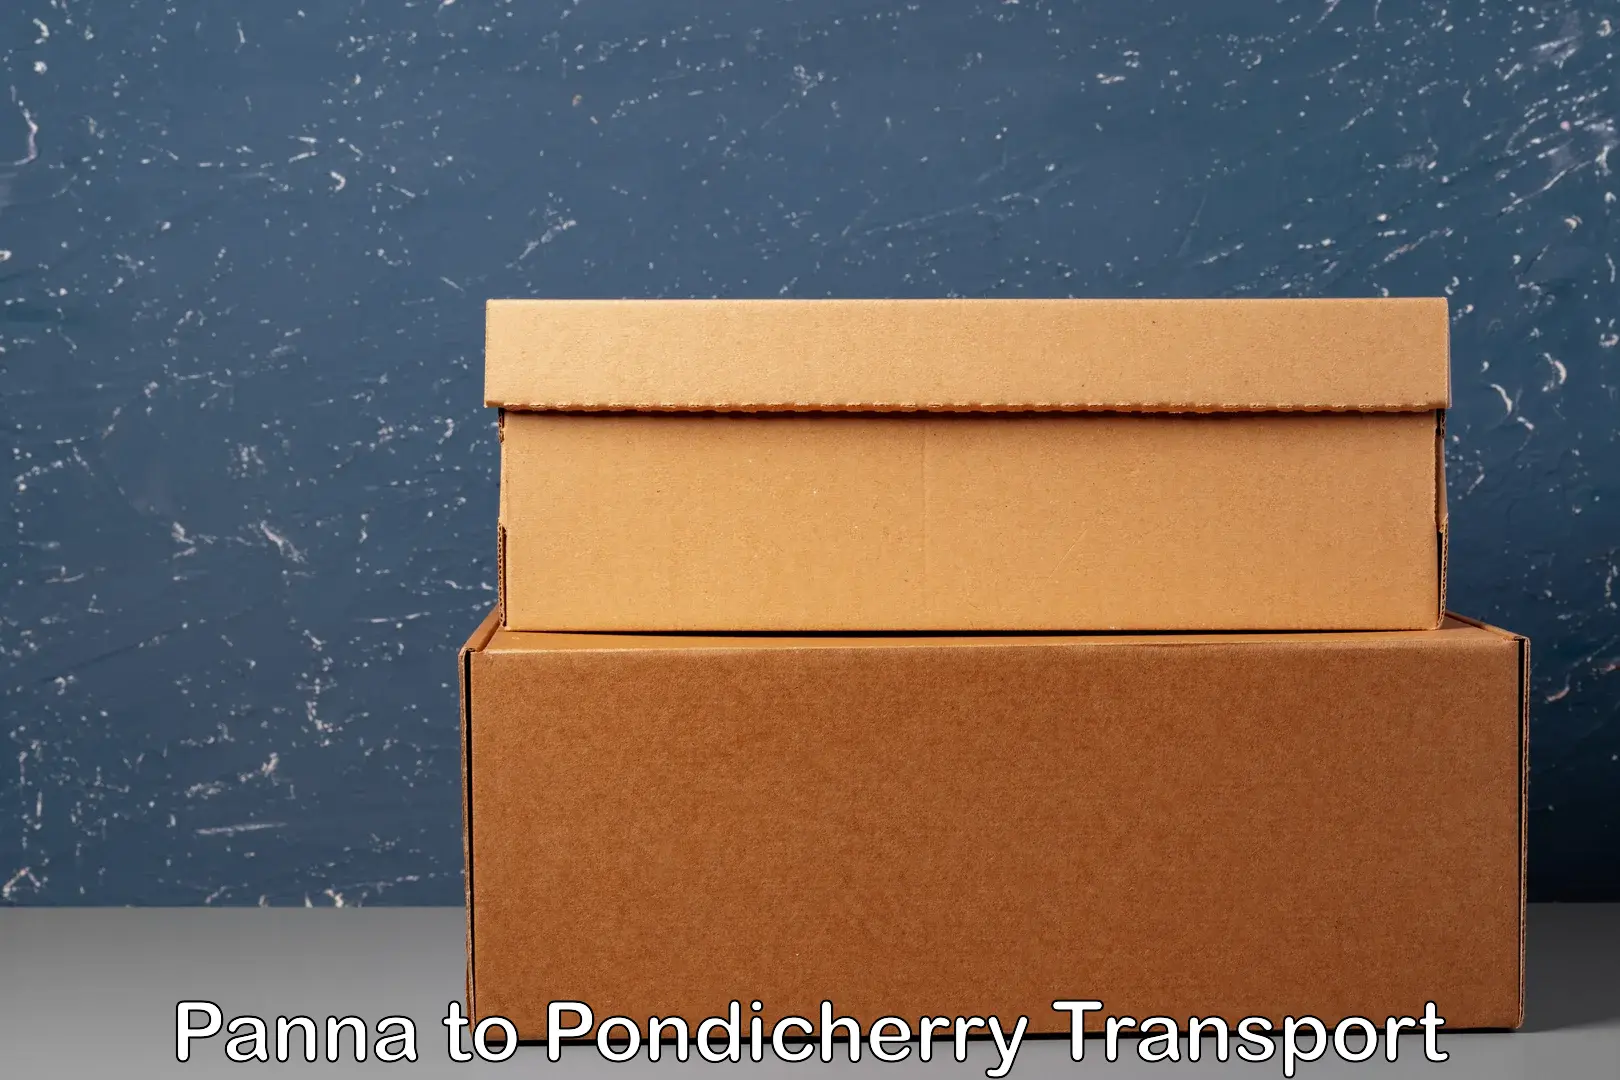 Transport in sharing Panna to Pondicherry